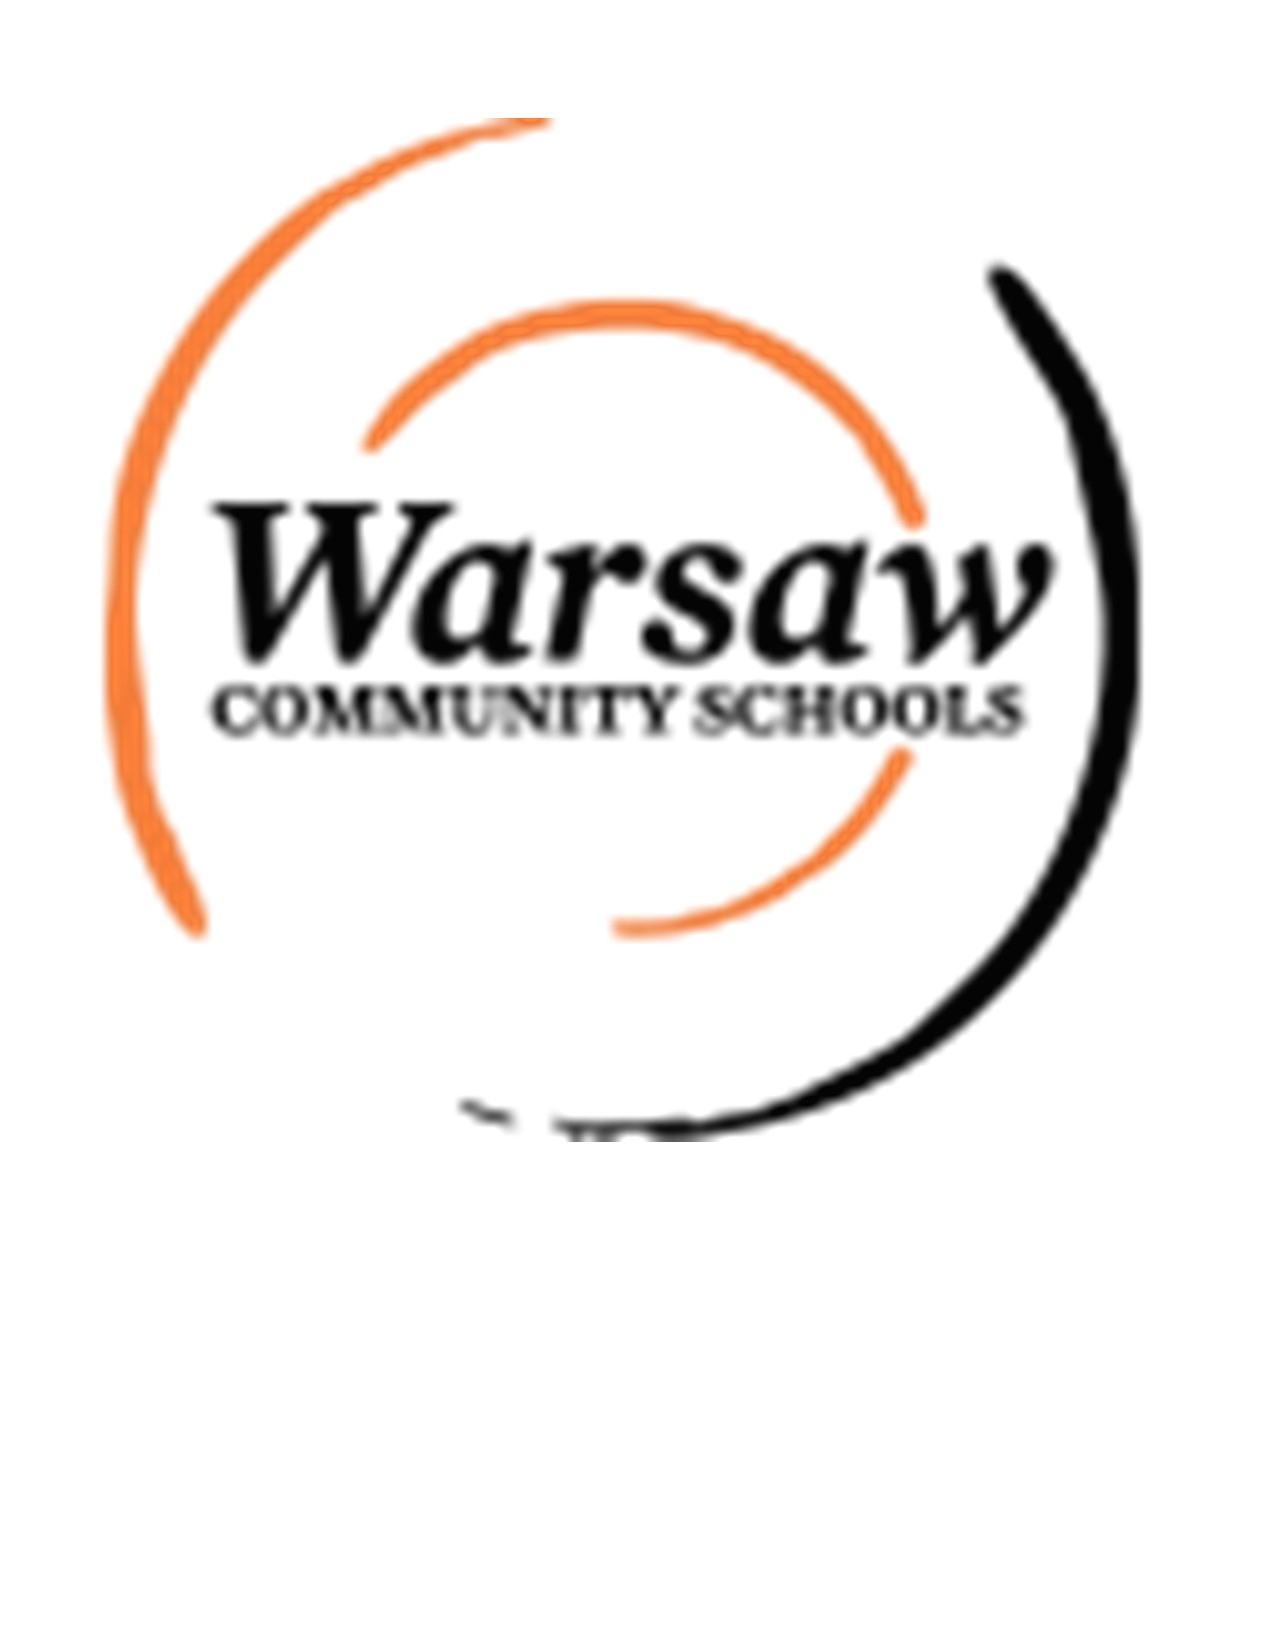 Warsaw Comm Schools logo